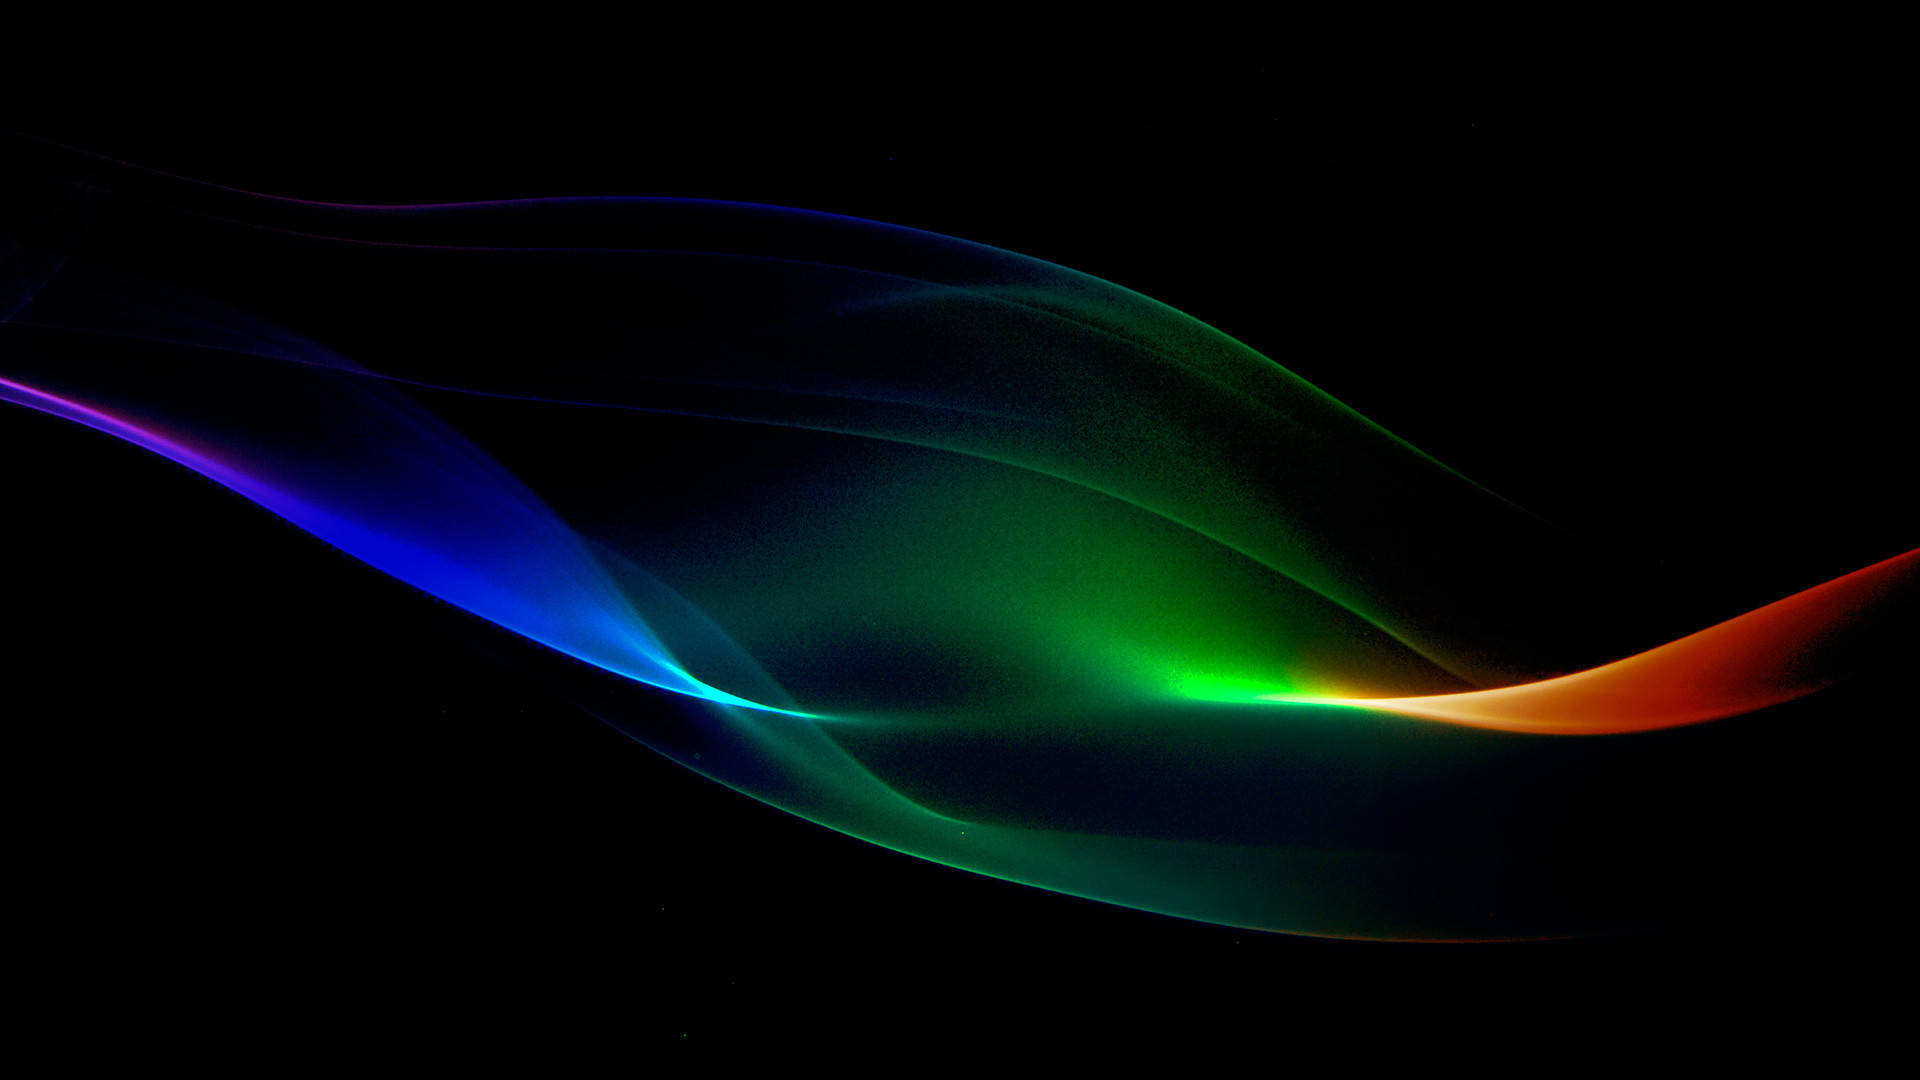 Abstract Waves Of Light On Black Desktop